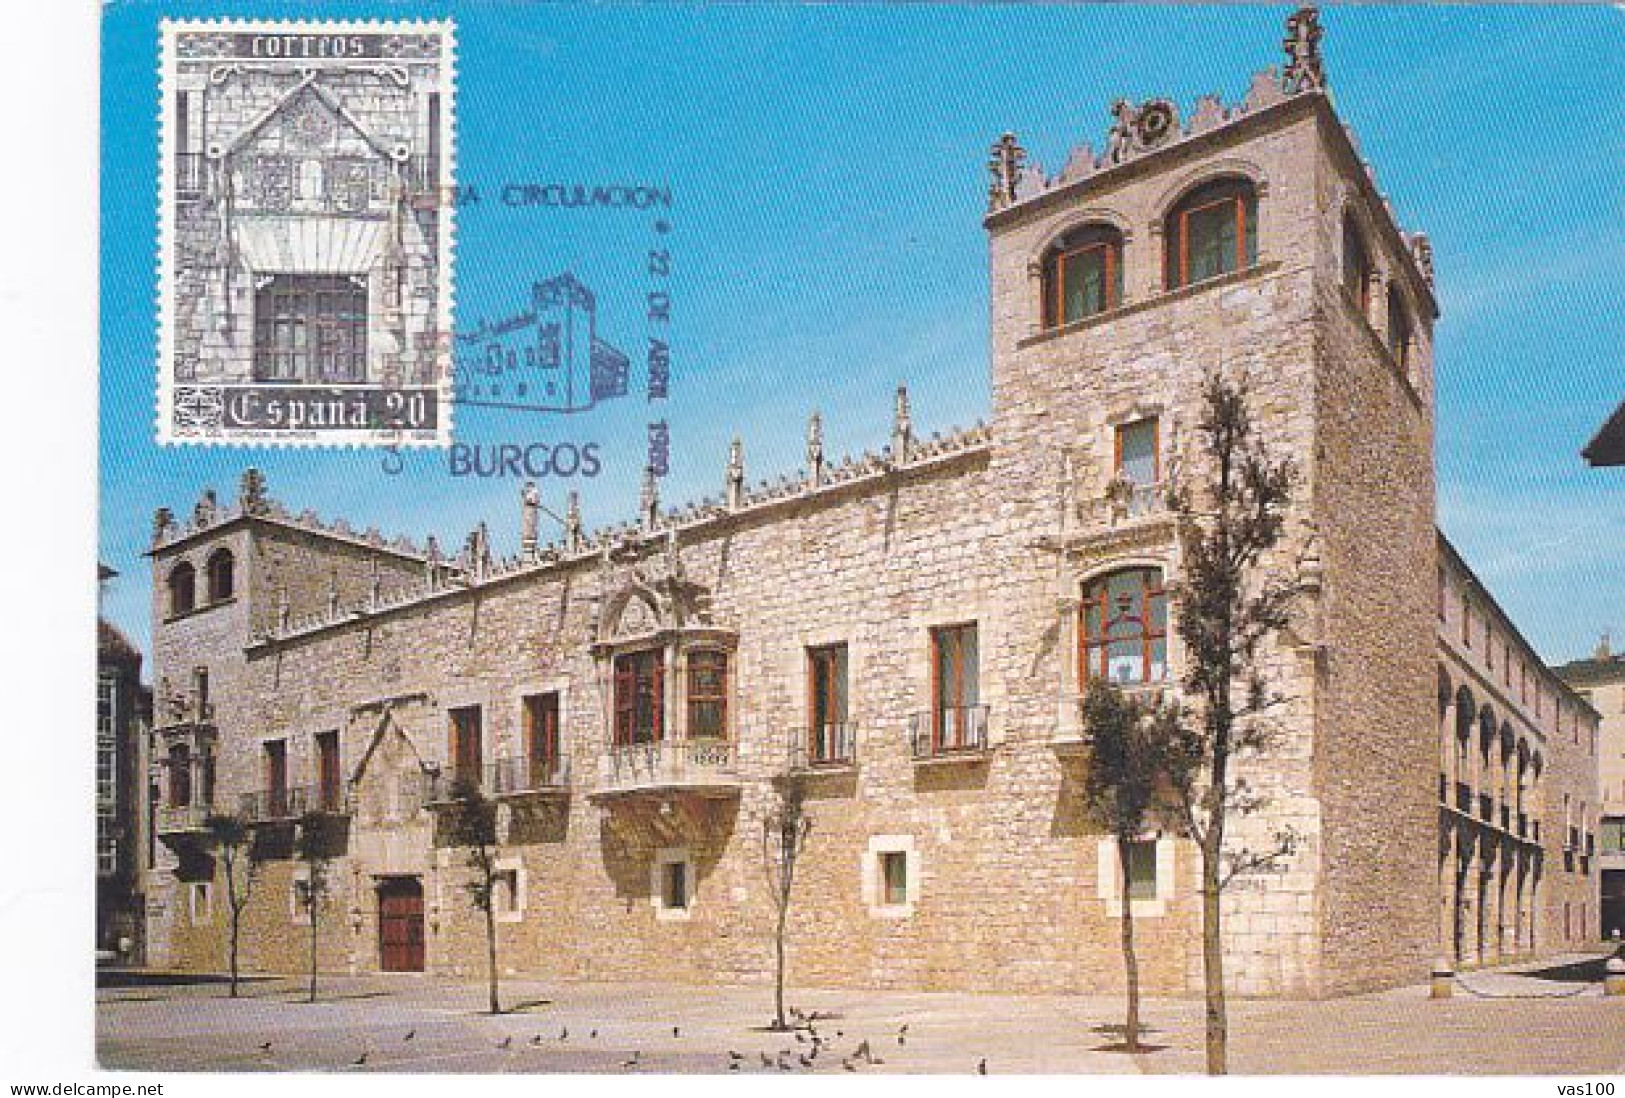 BURGOS- TREASURY OFFICE BUILDING, CM, MAXICARD, CARTES MAXIMUM, OBLIT FDC, 1989, SPAIN - Tarjetas Máxima